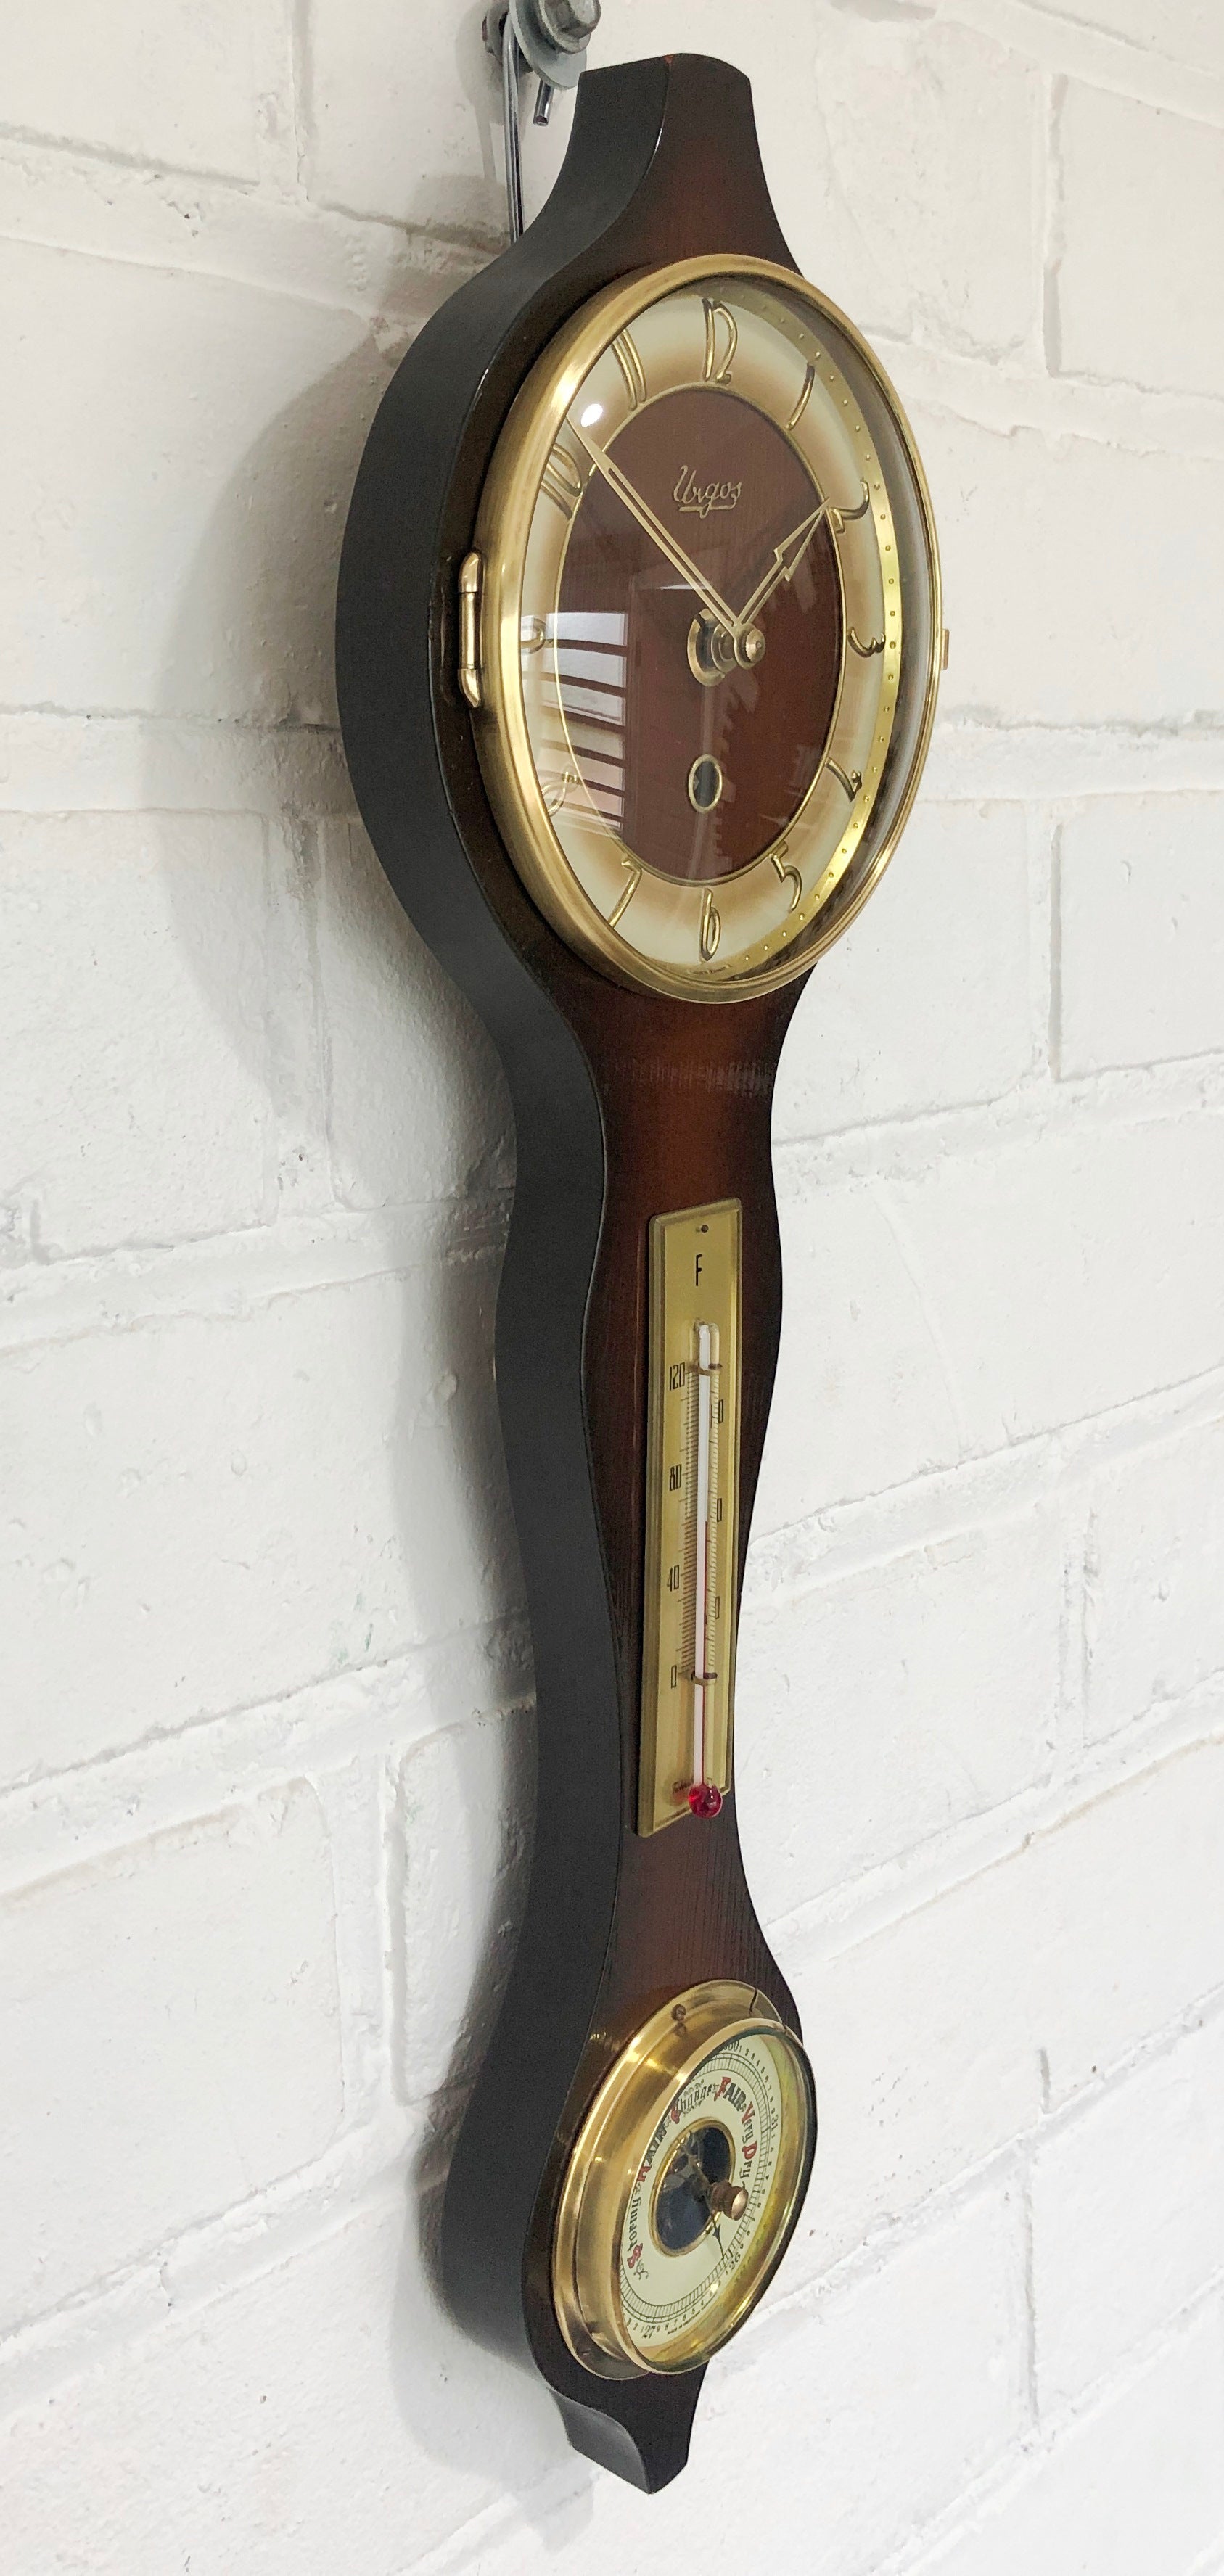 Vintage URGOS Wall Clock & Barometer | eXibit collection